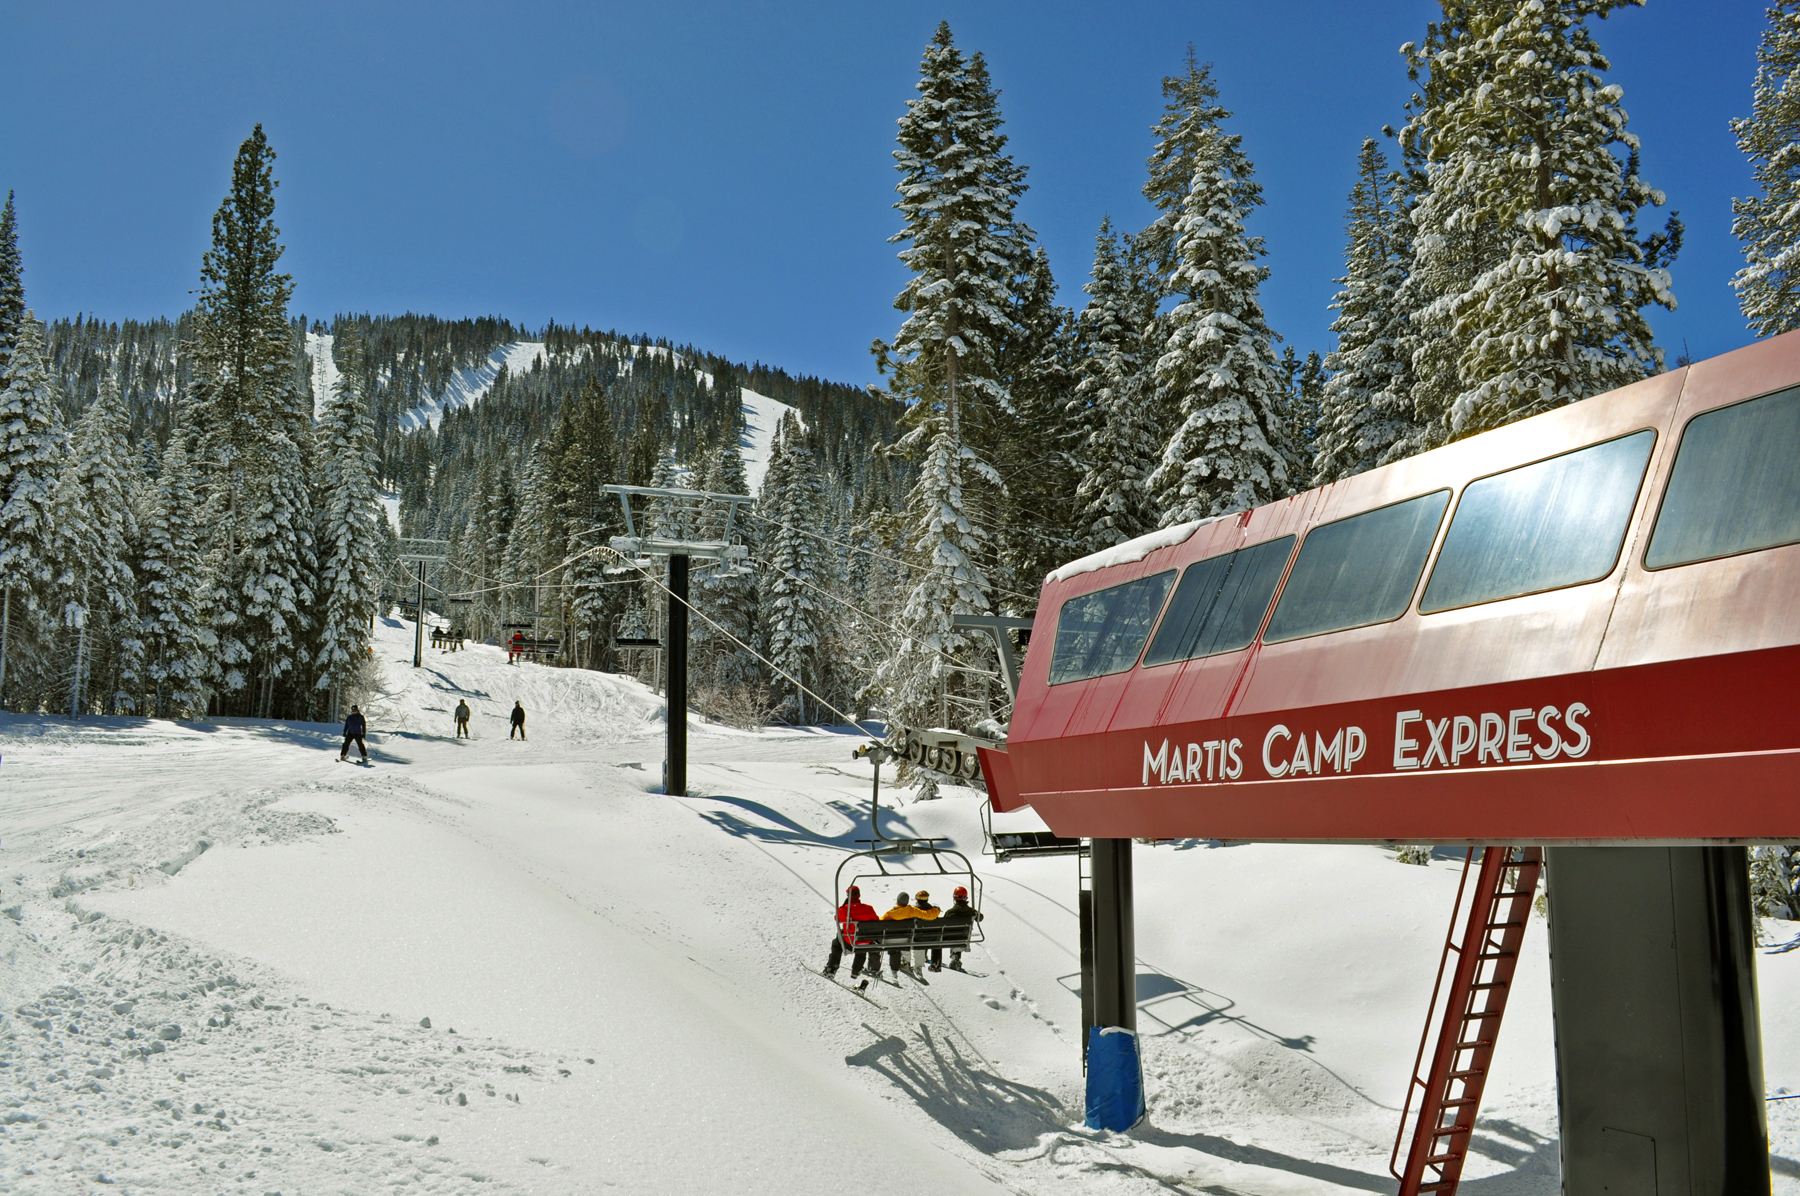 Martis Camp Express Ski Lift